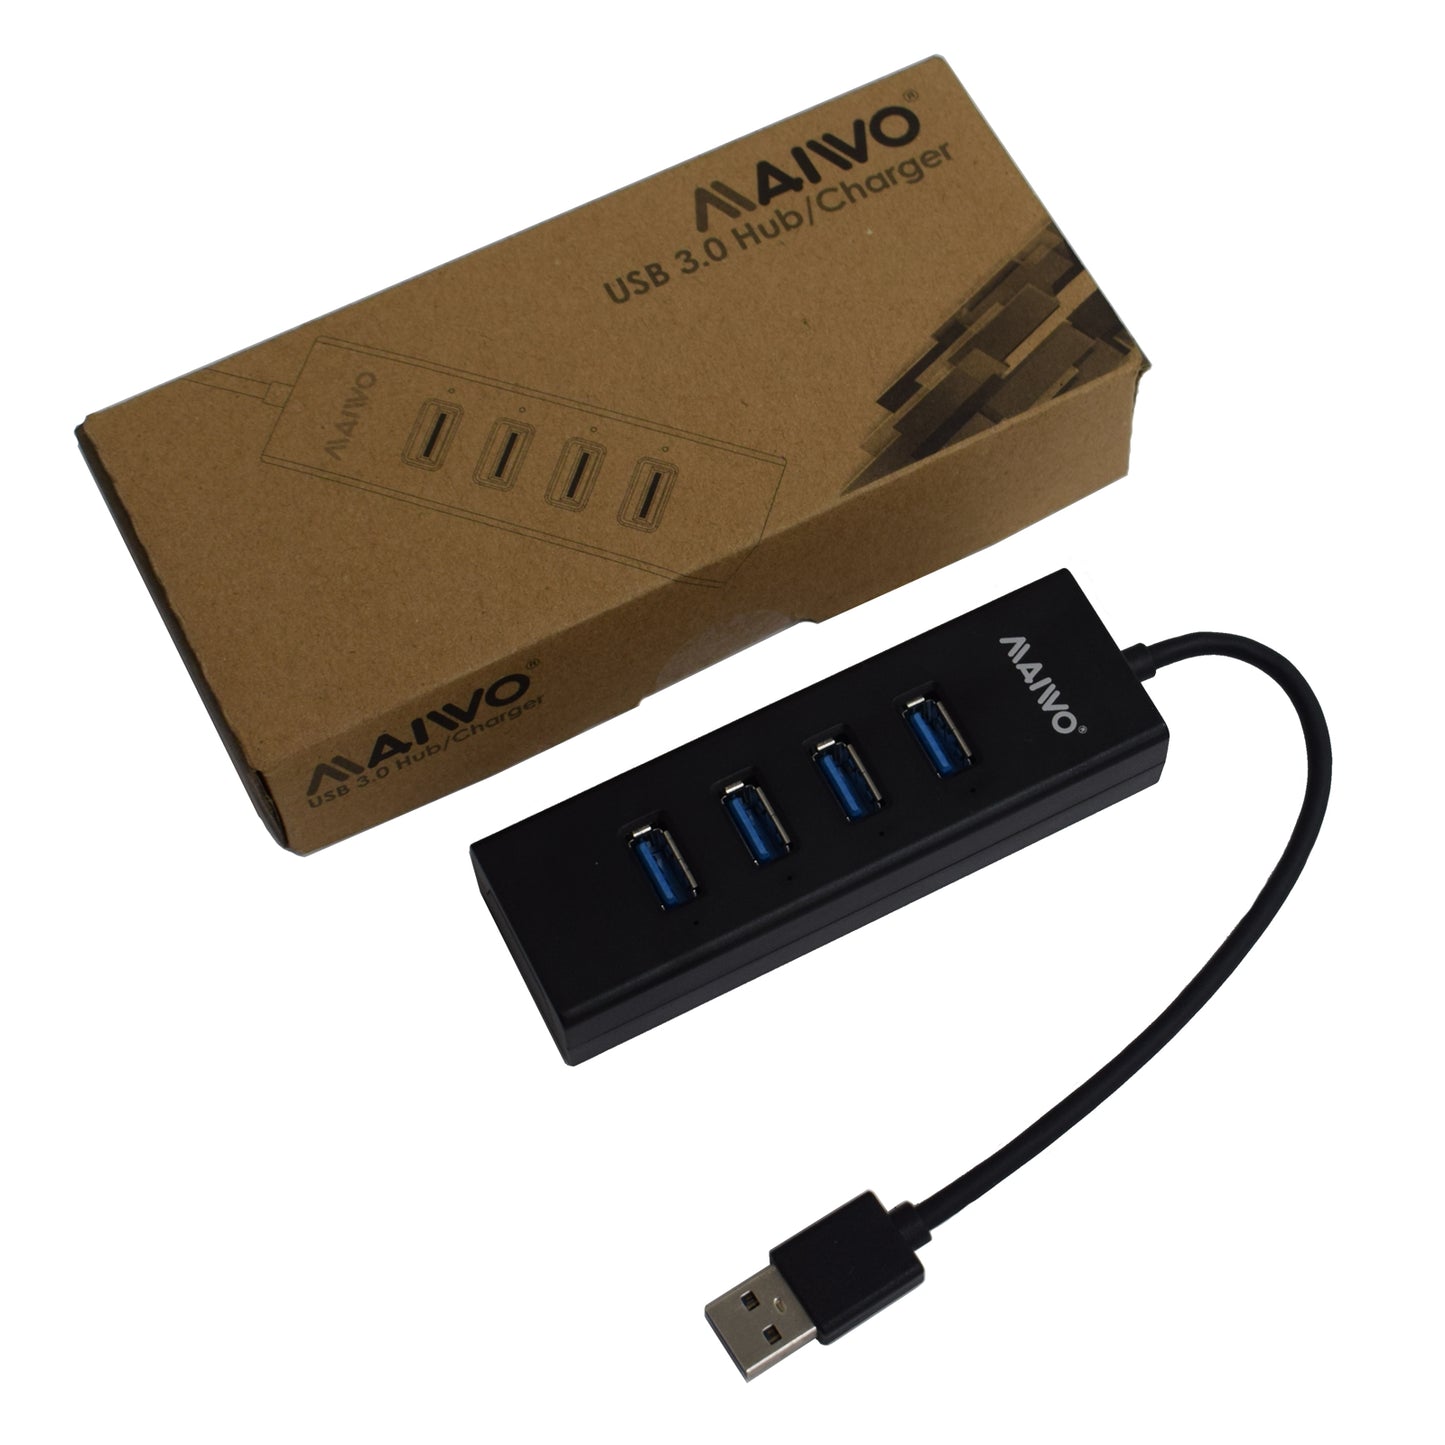 Maiwo KH304 4 Port USB 3.0 Hub Splitter & Charger